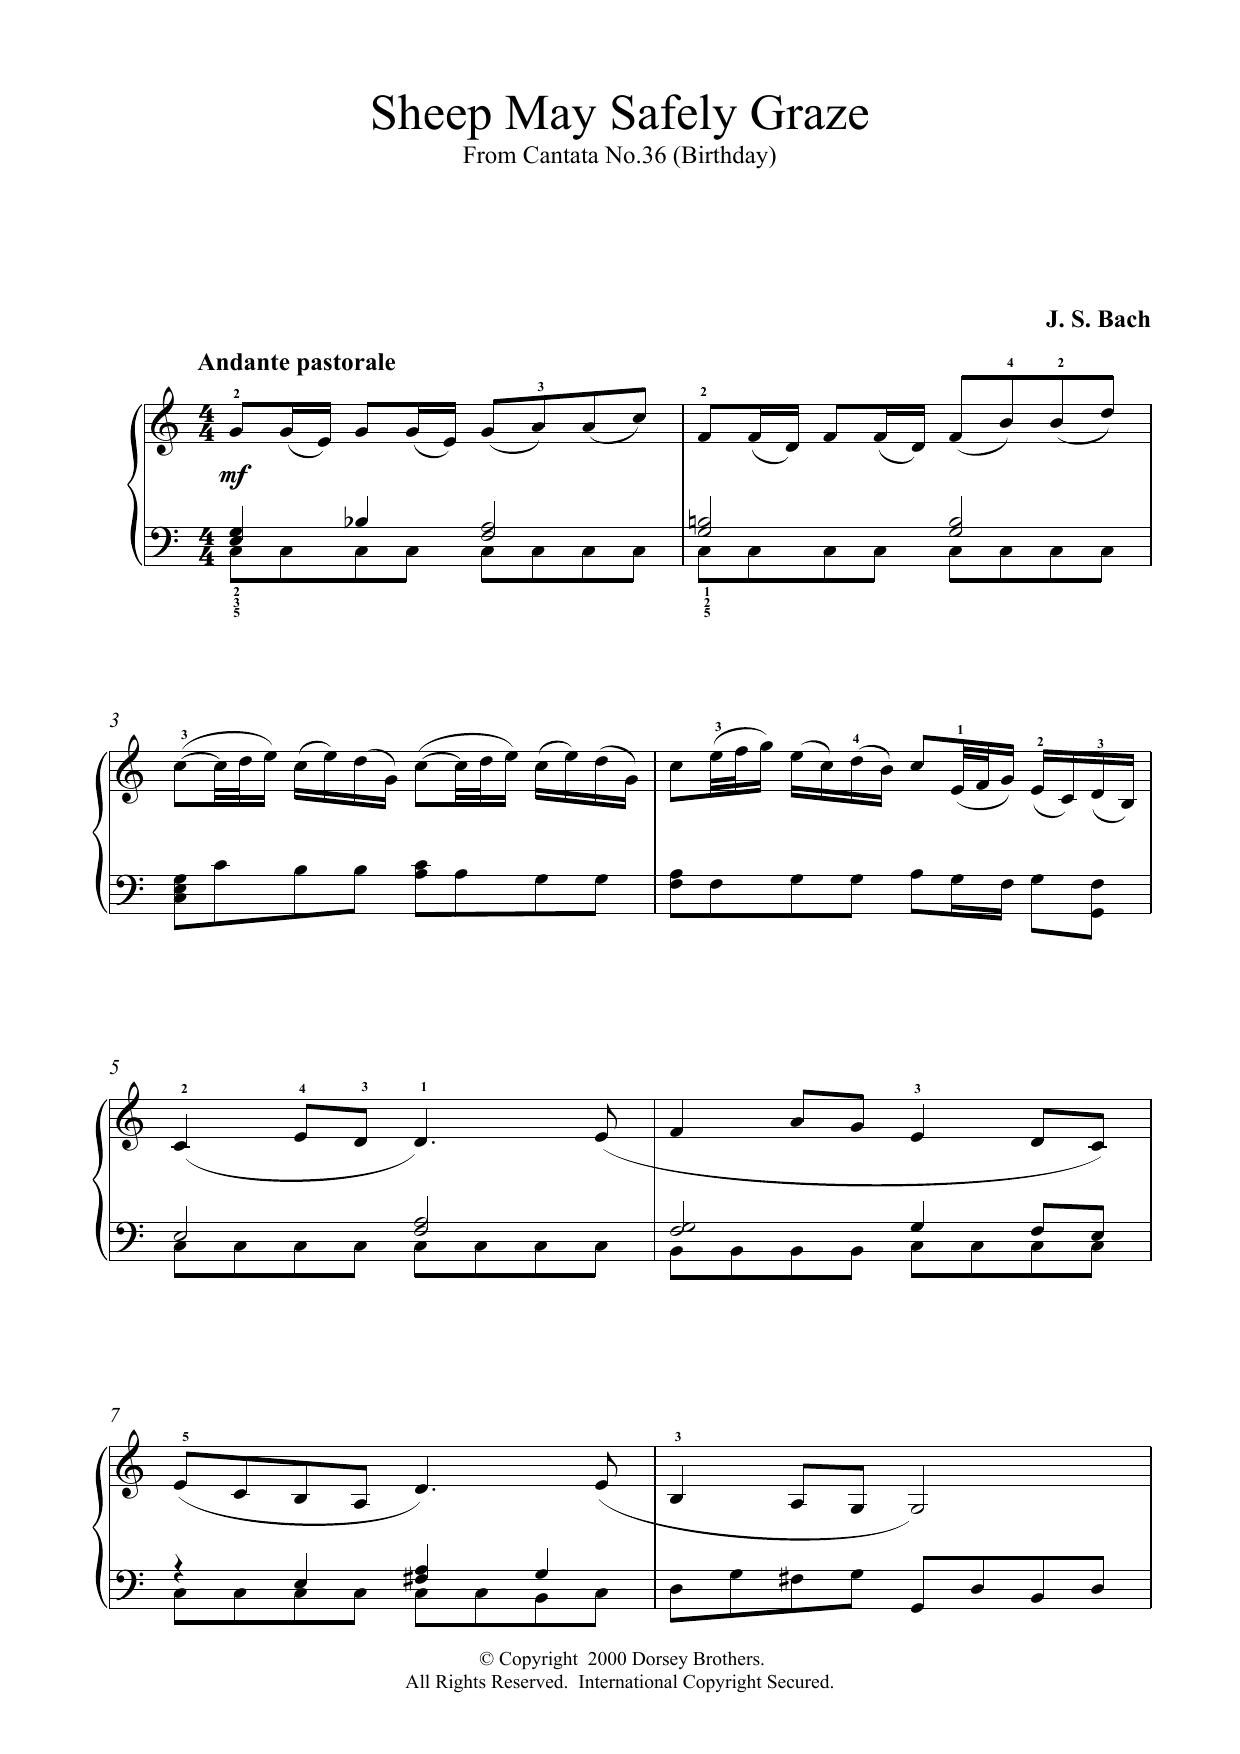 Johann Sebastian Bach Sheep May Safely Graze Sheet Music Notes & Chords for Viola - Download or Print PDF